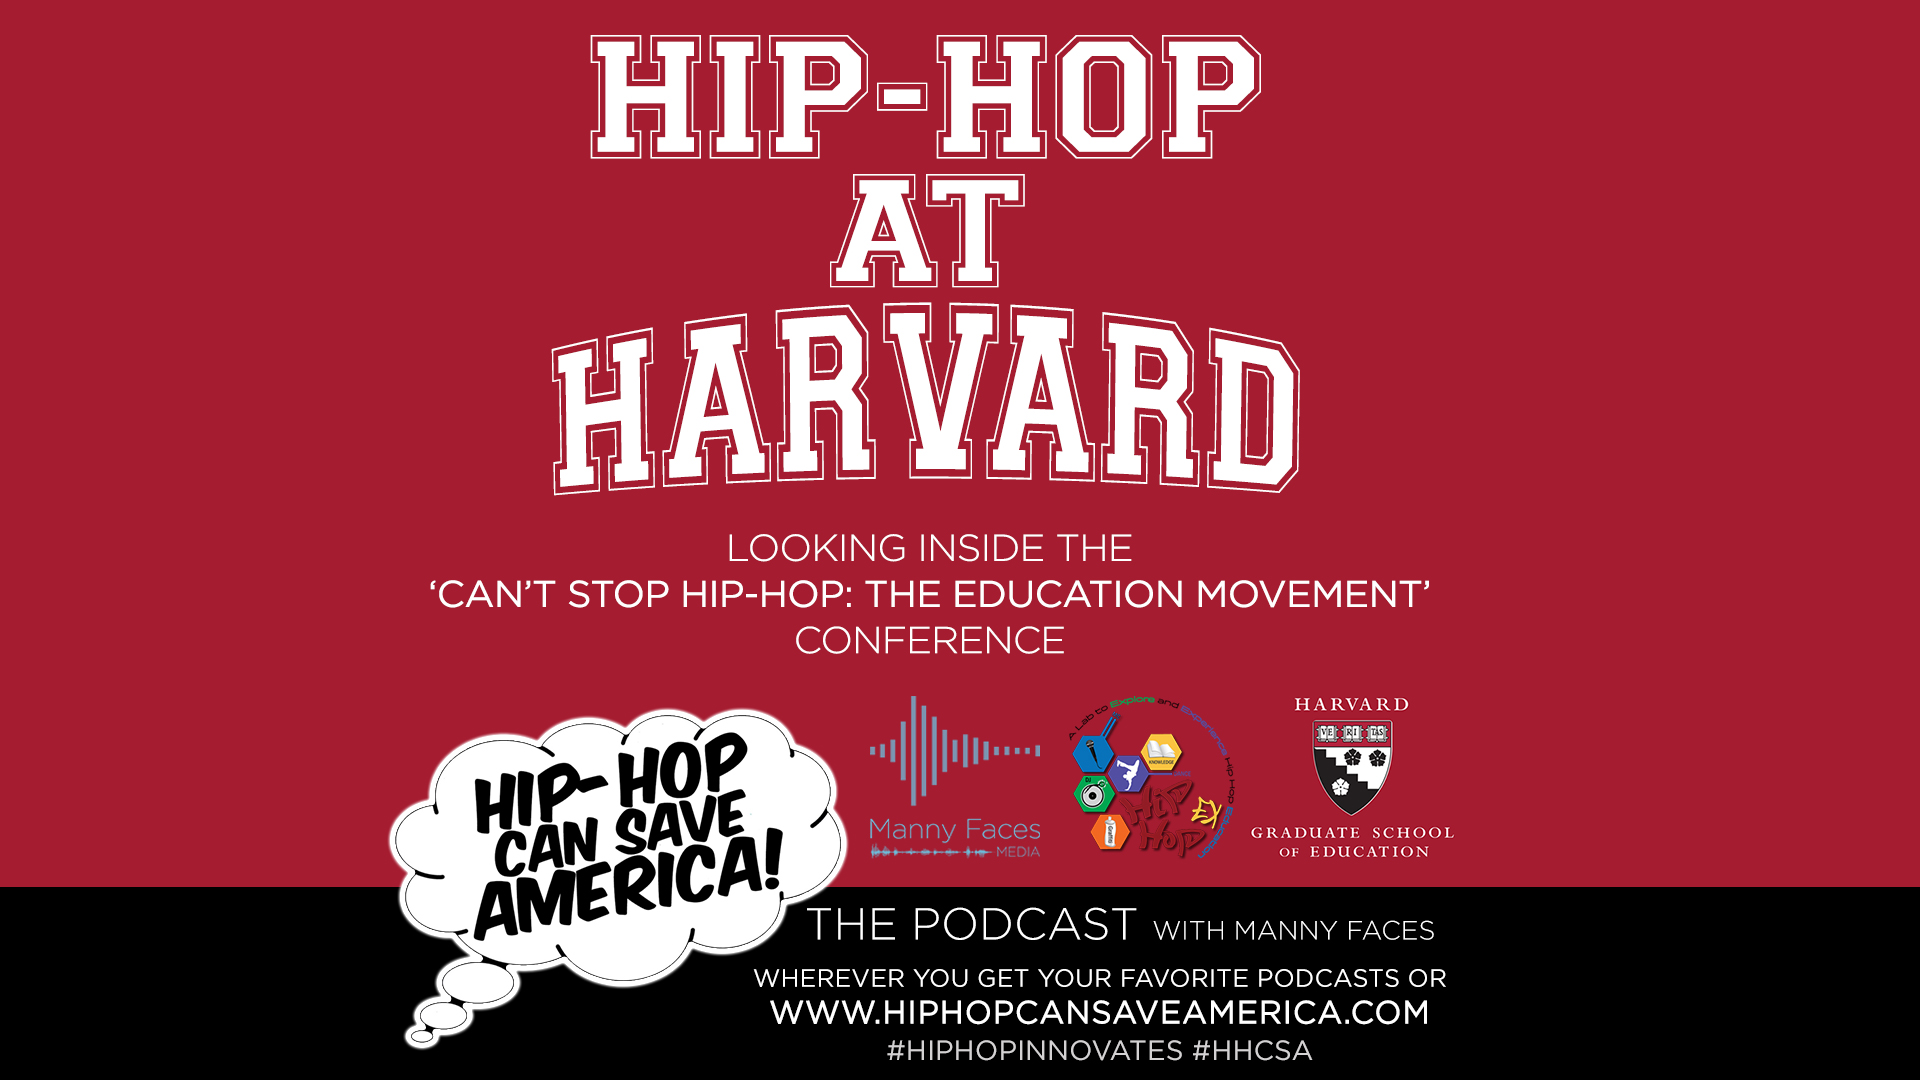 Can't Stop Hop-Hop: The Education Movement at Harvard - Podcast recap